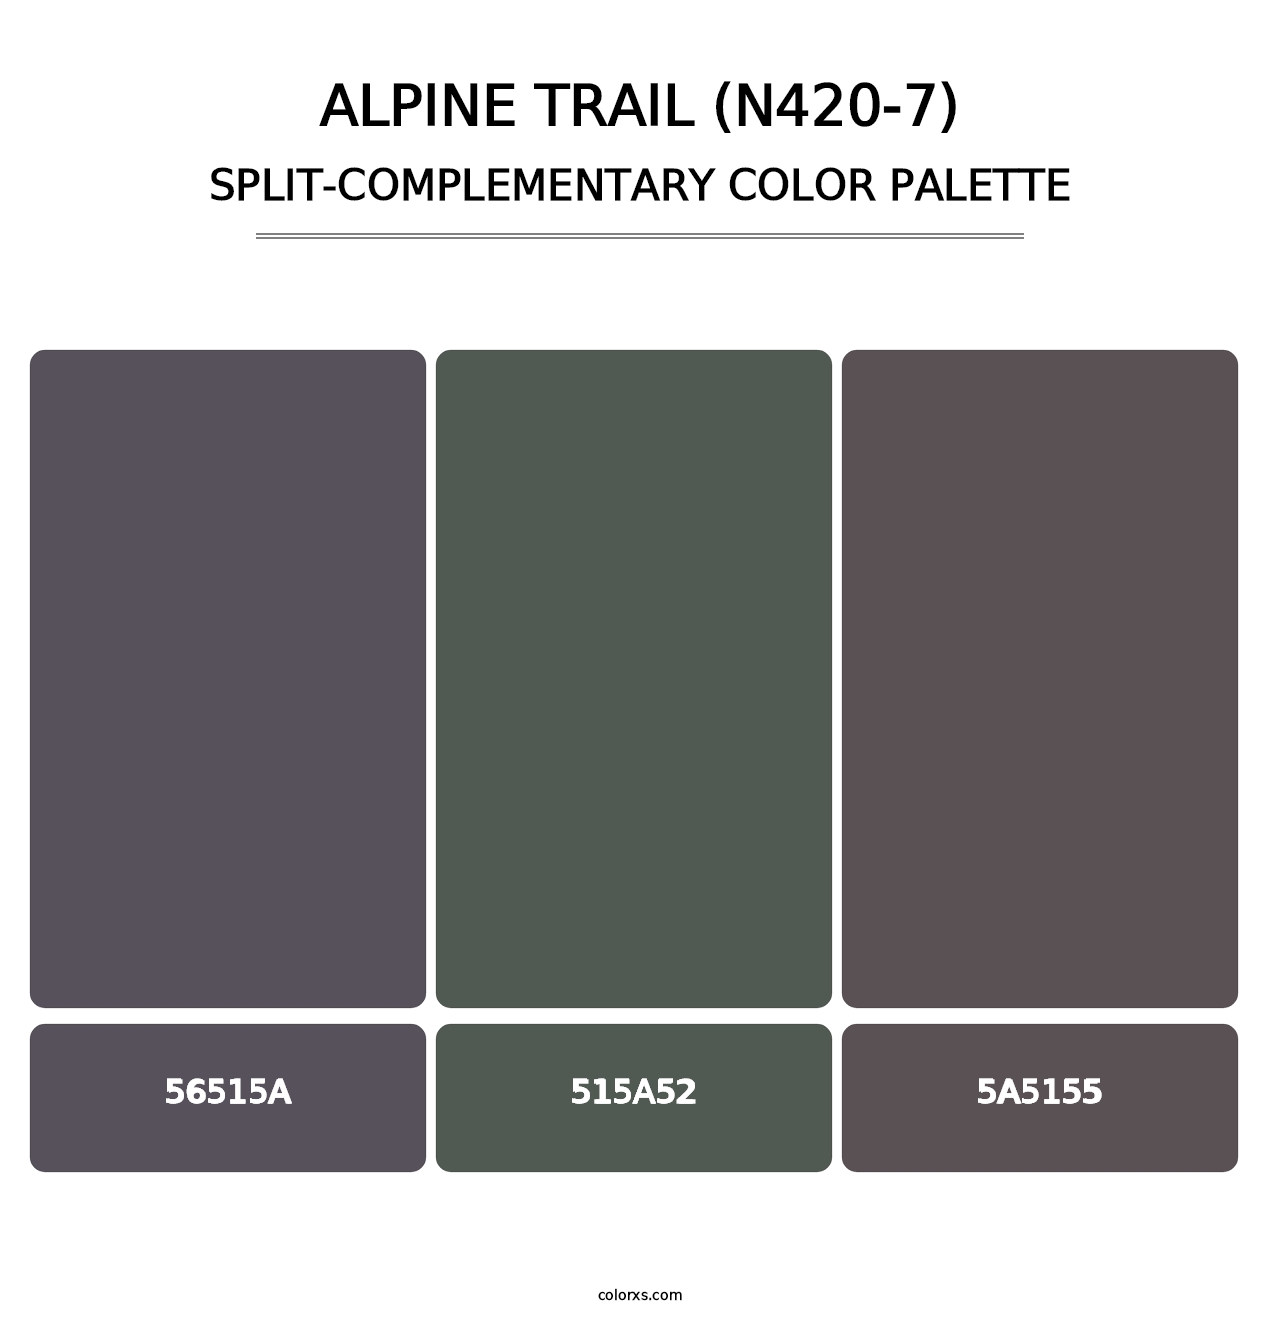 Alpine Trail (N420-7) - Split-Complementary Color Palette